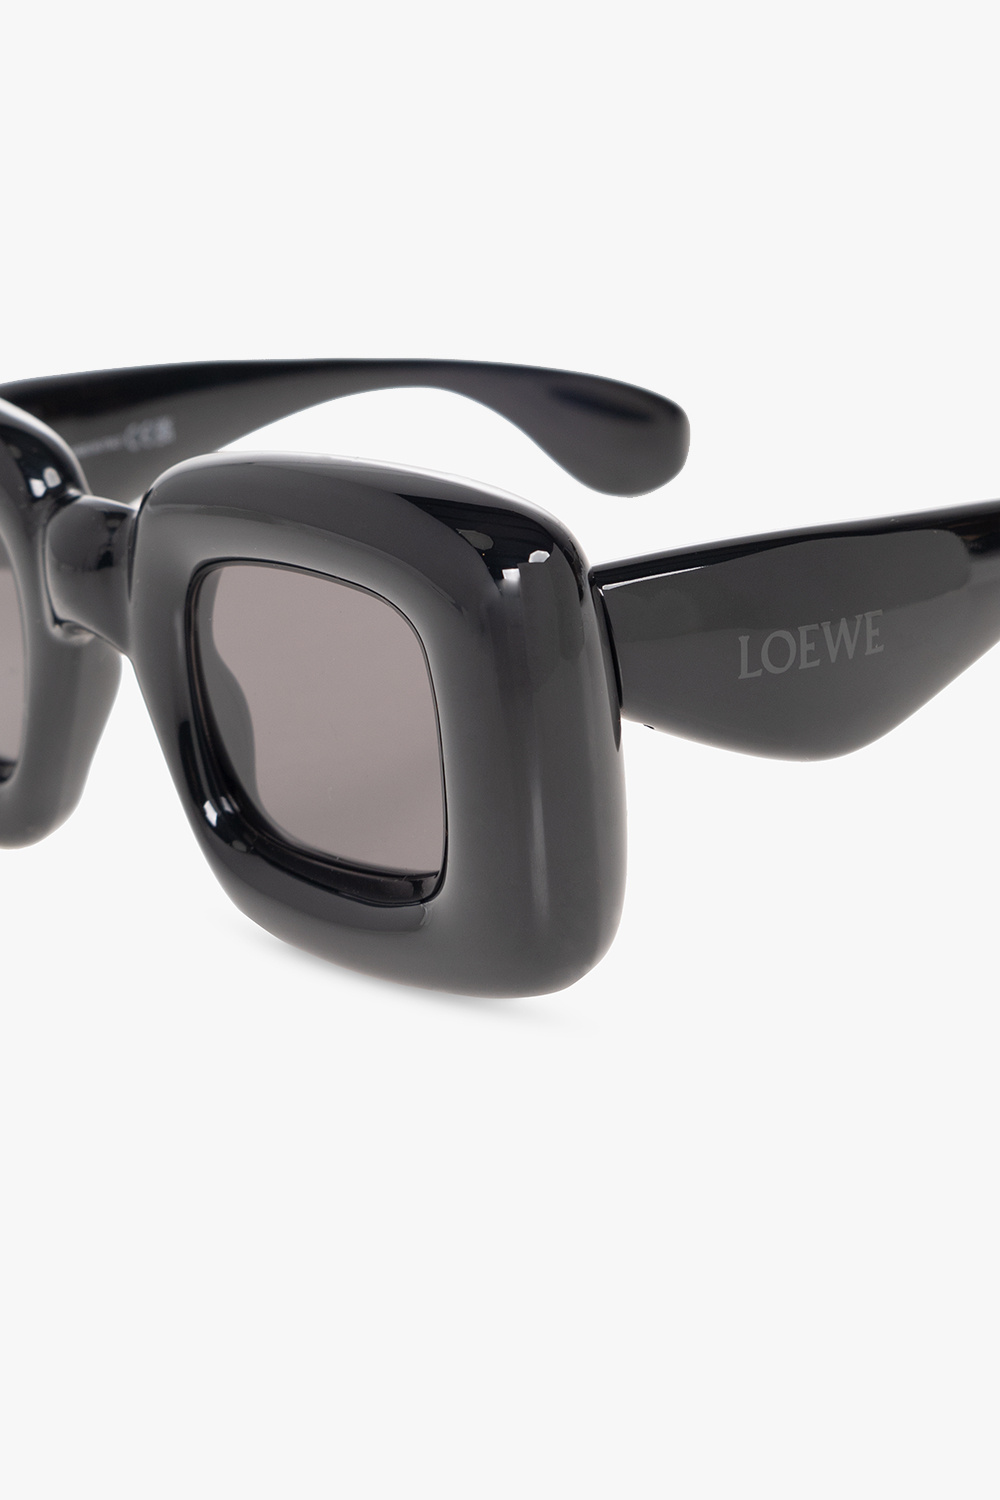 Loewe Siza Vieira Cl0007 Silver Sunglasses